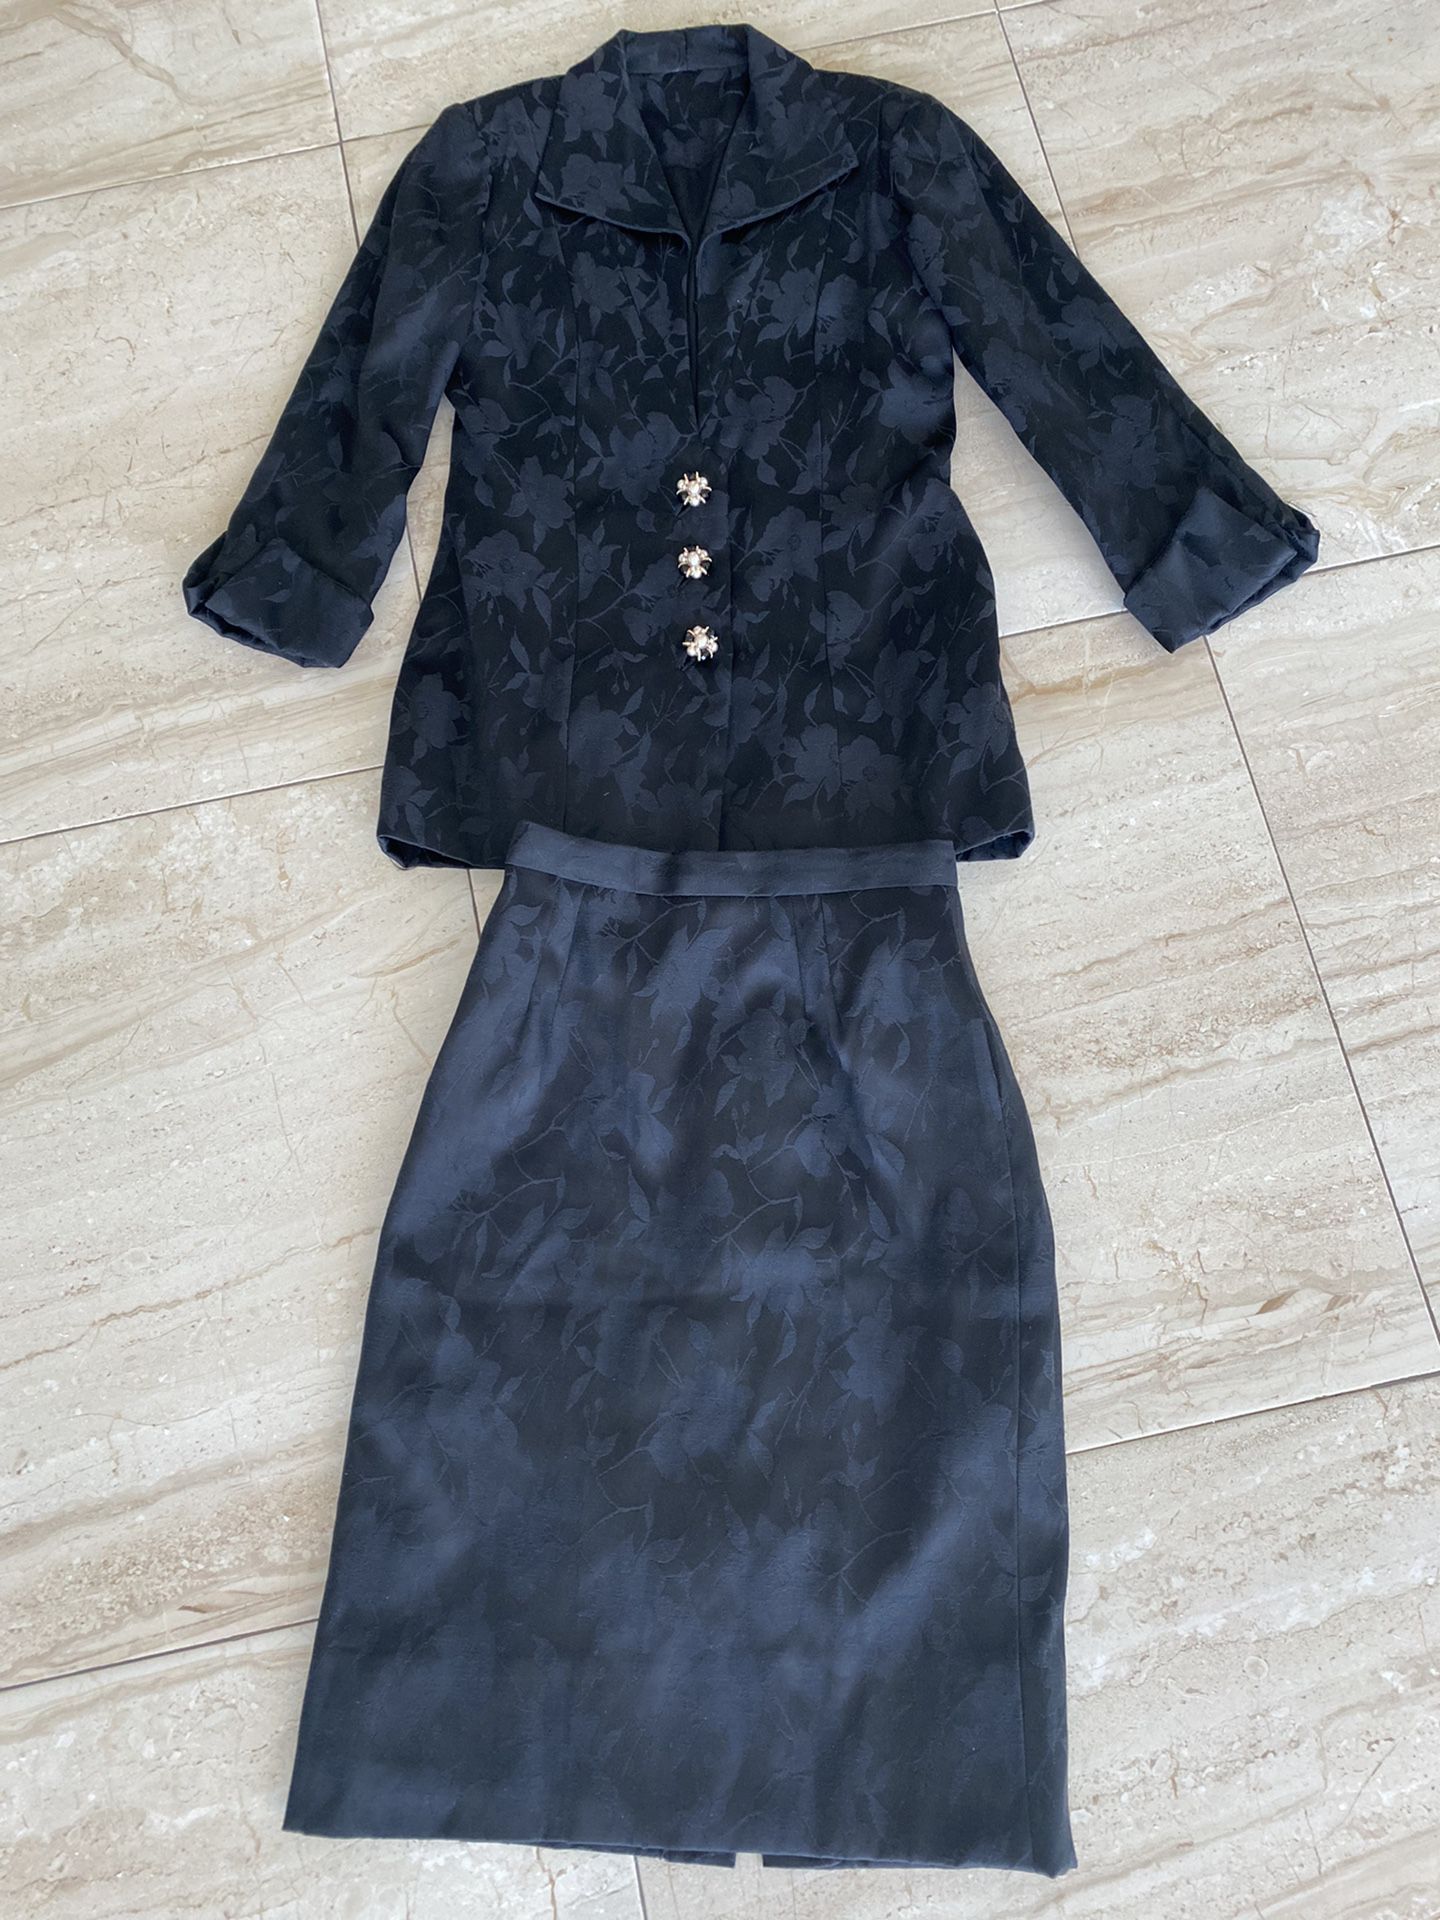 Silk Black Flower Pattern Skirt And Jacket Dressy Suit